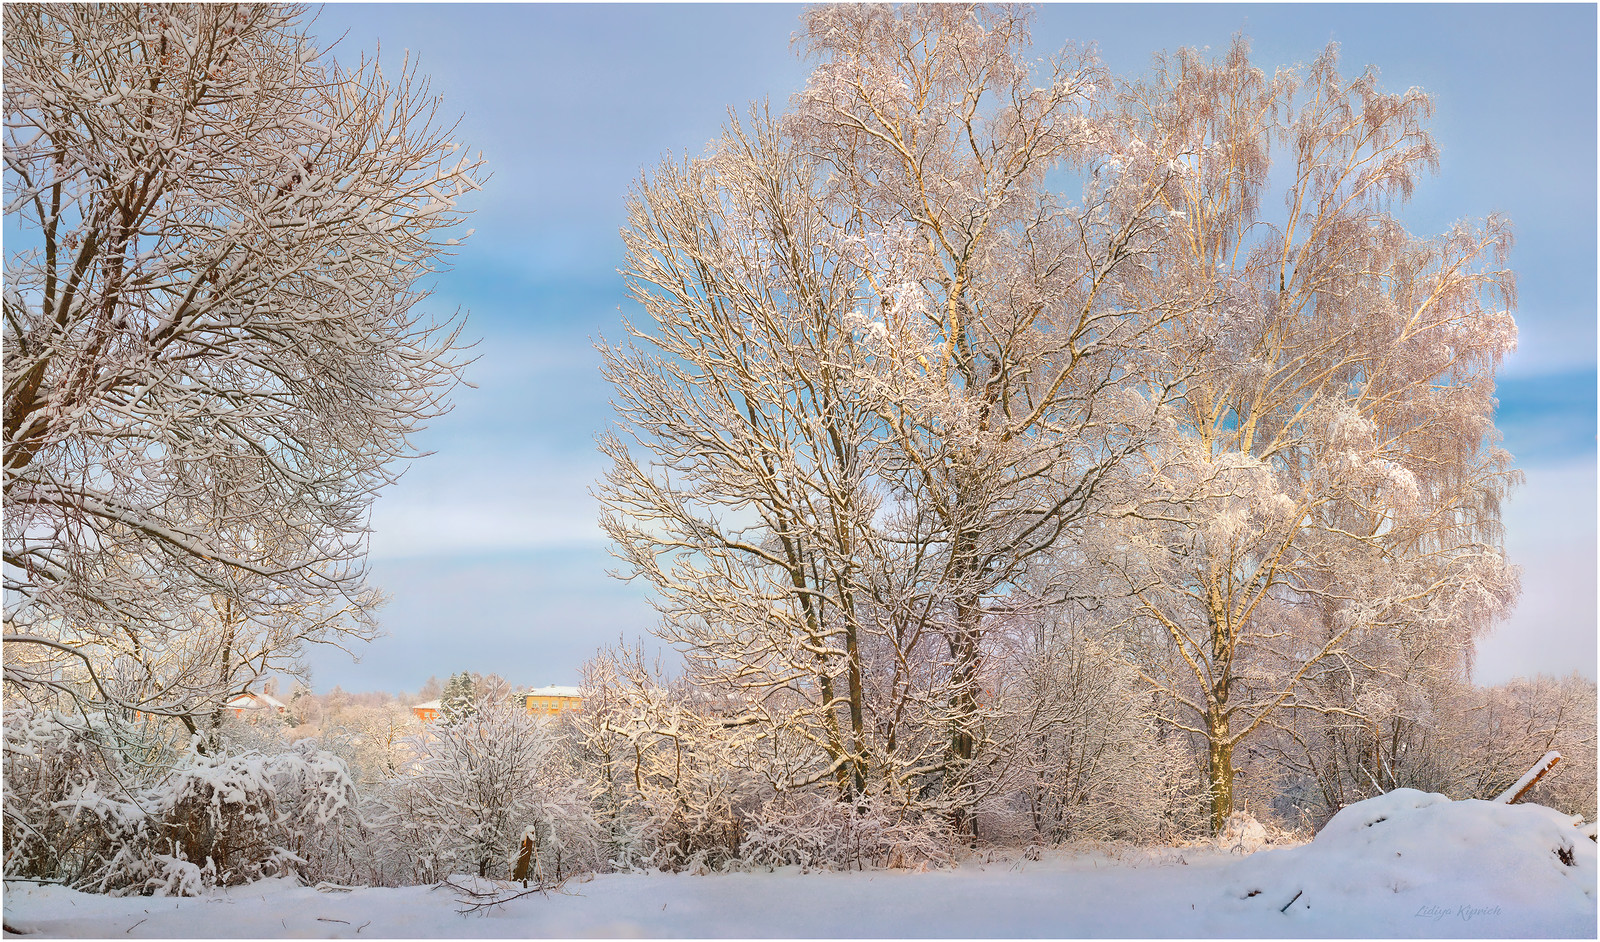 Родной край зимой. Деревья Воронежского края зимой. Фото Арзгира Ставропольского края зимой.